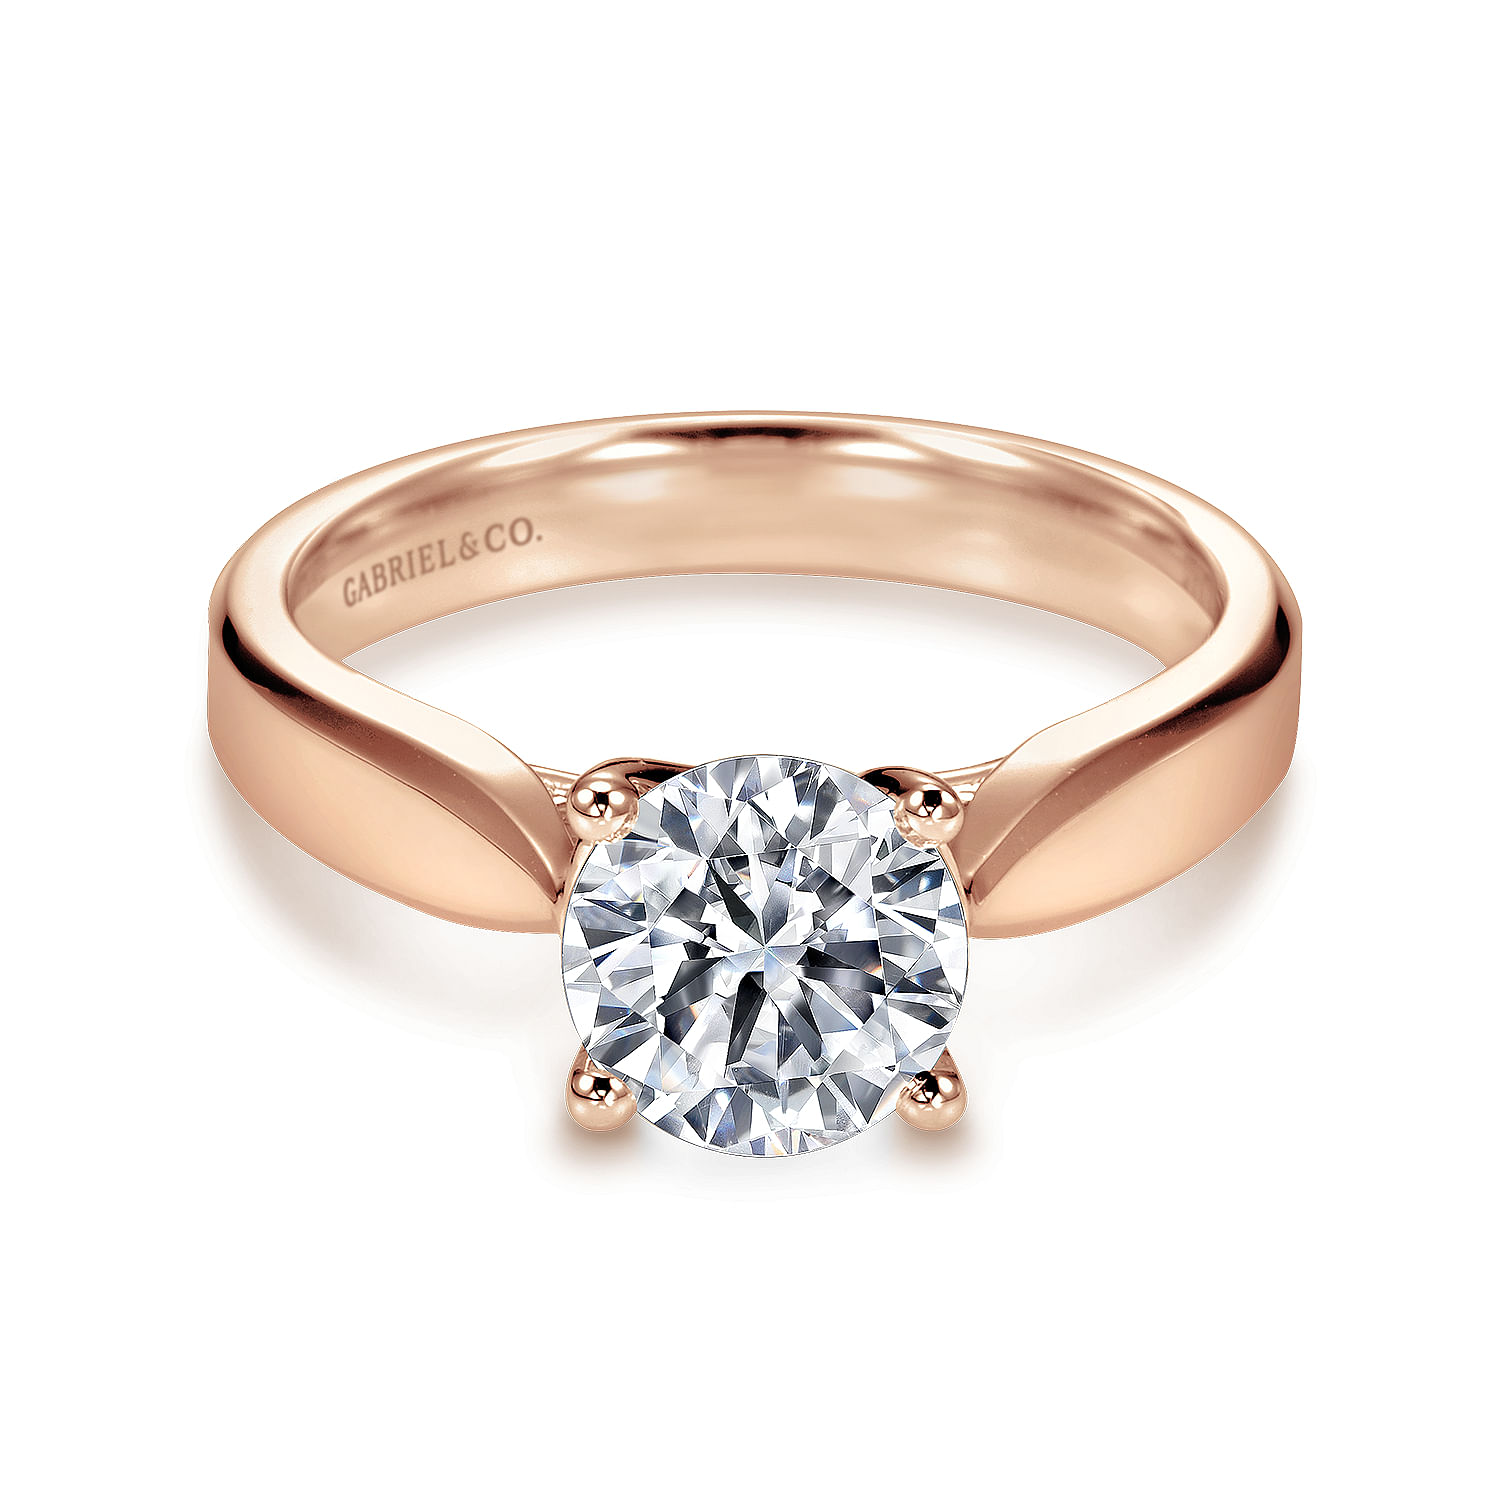 Jamie - 14K Rose Gold Round Diamond Engagement Ring